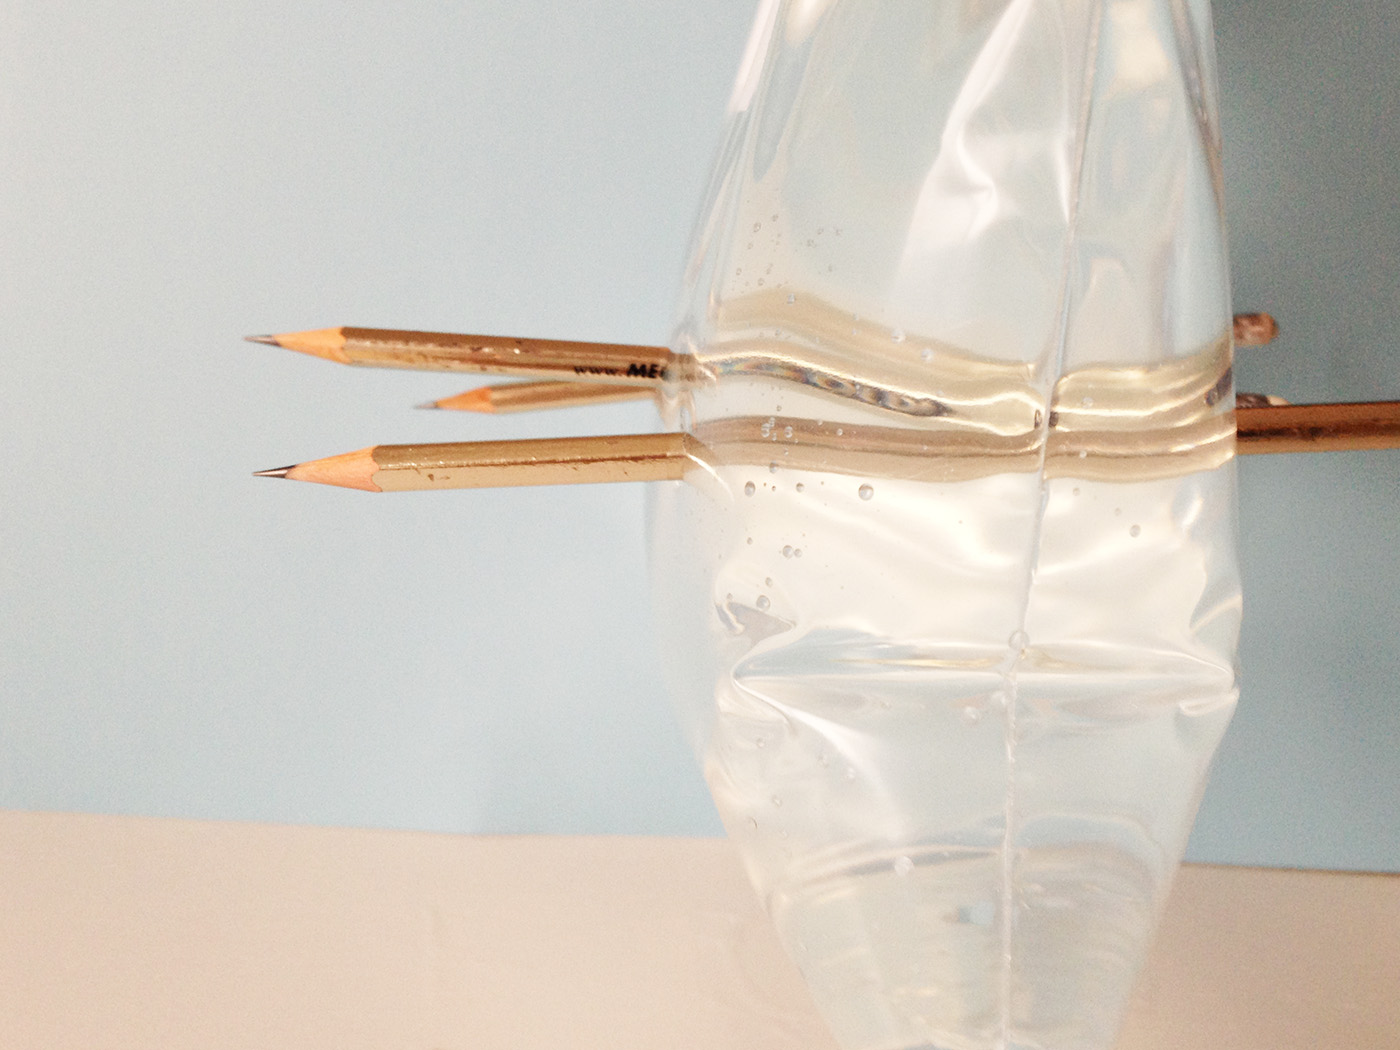 Poking pencils through a plastic bag